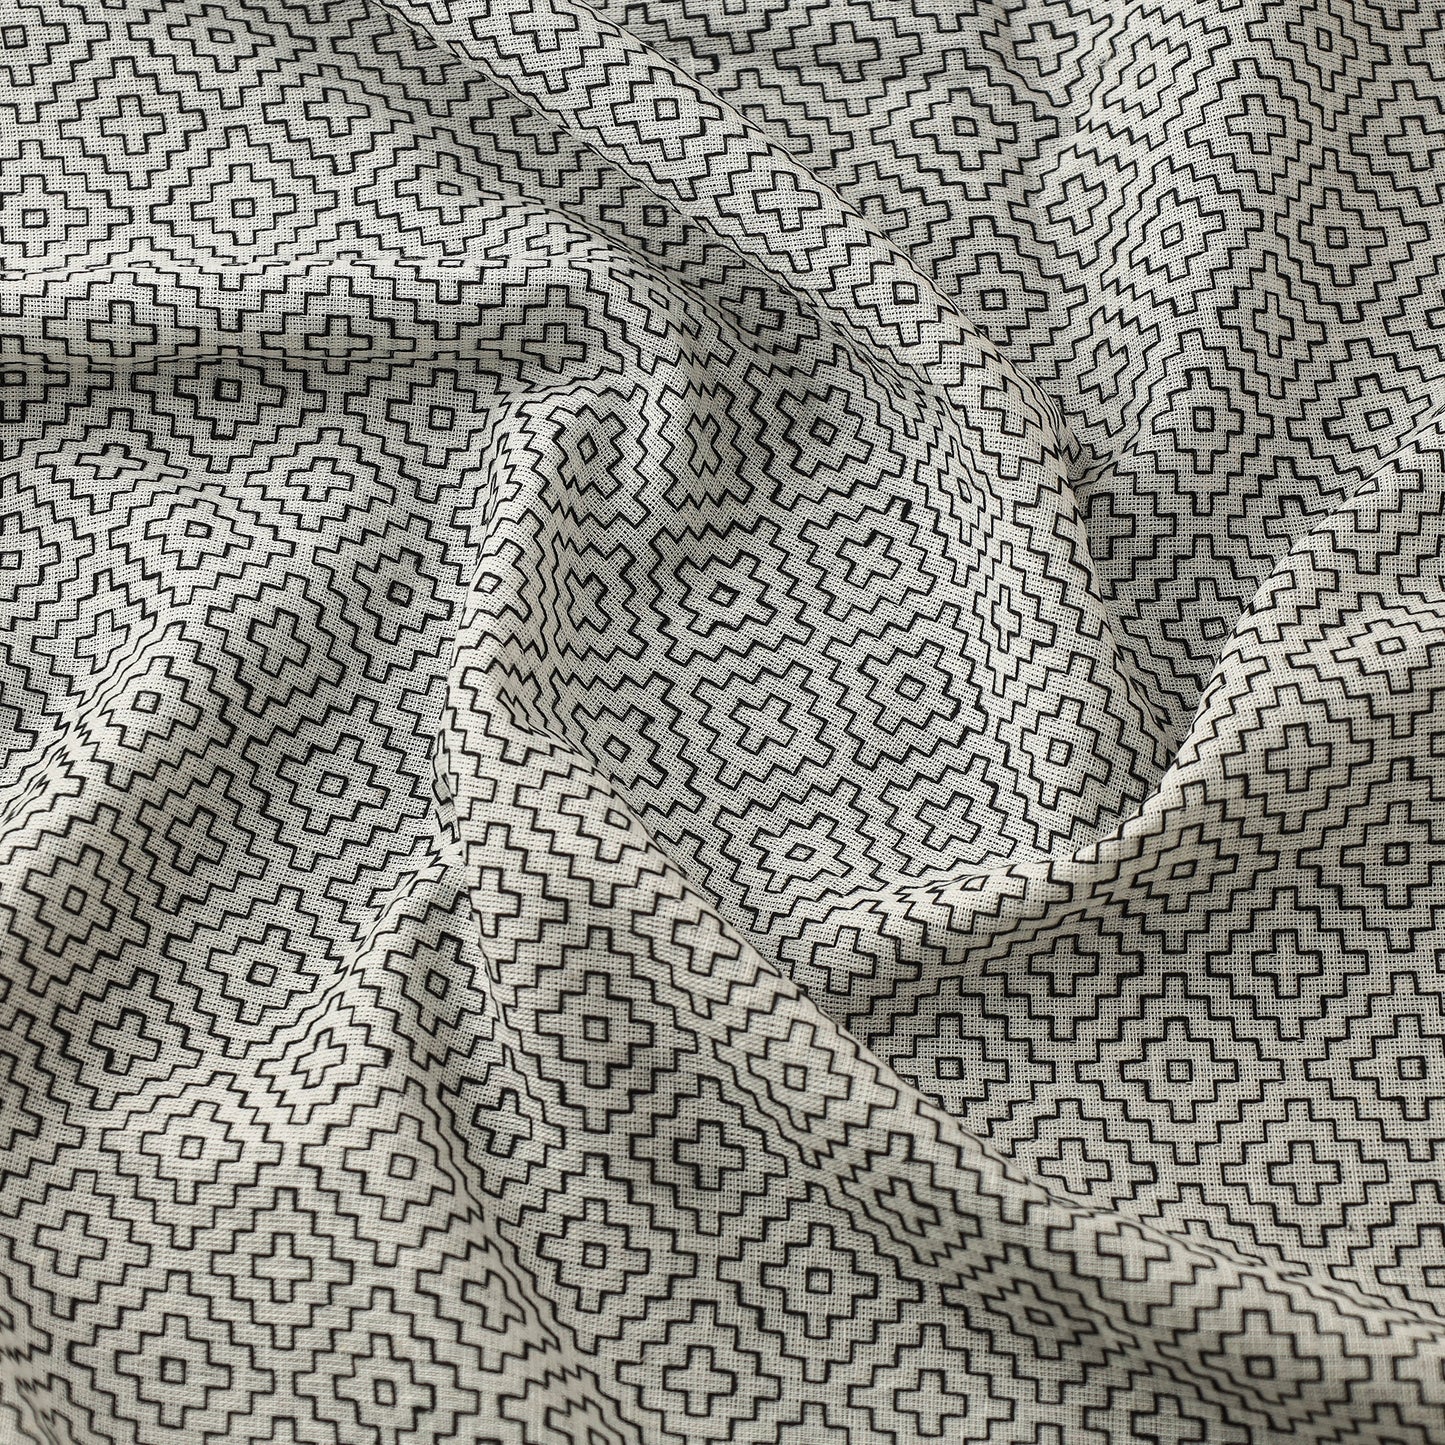 Grey - Jacquard Prewashed Cotton Fabric